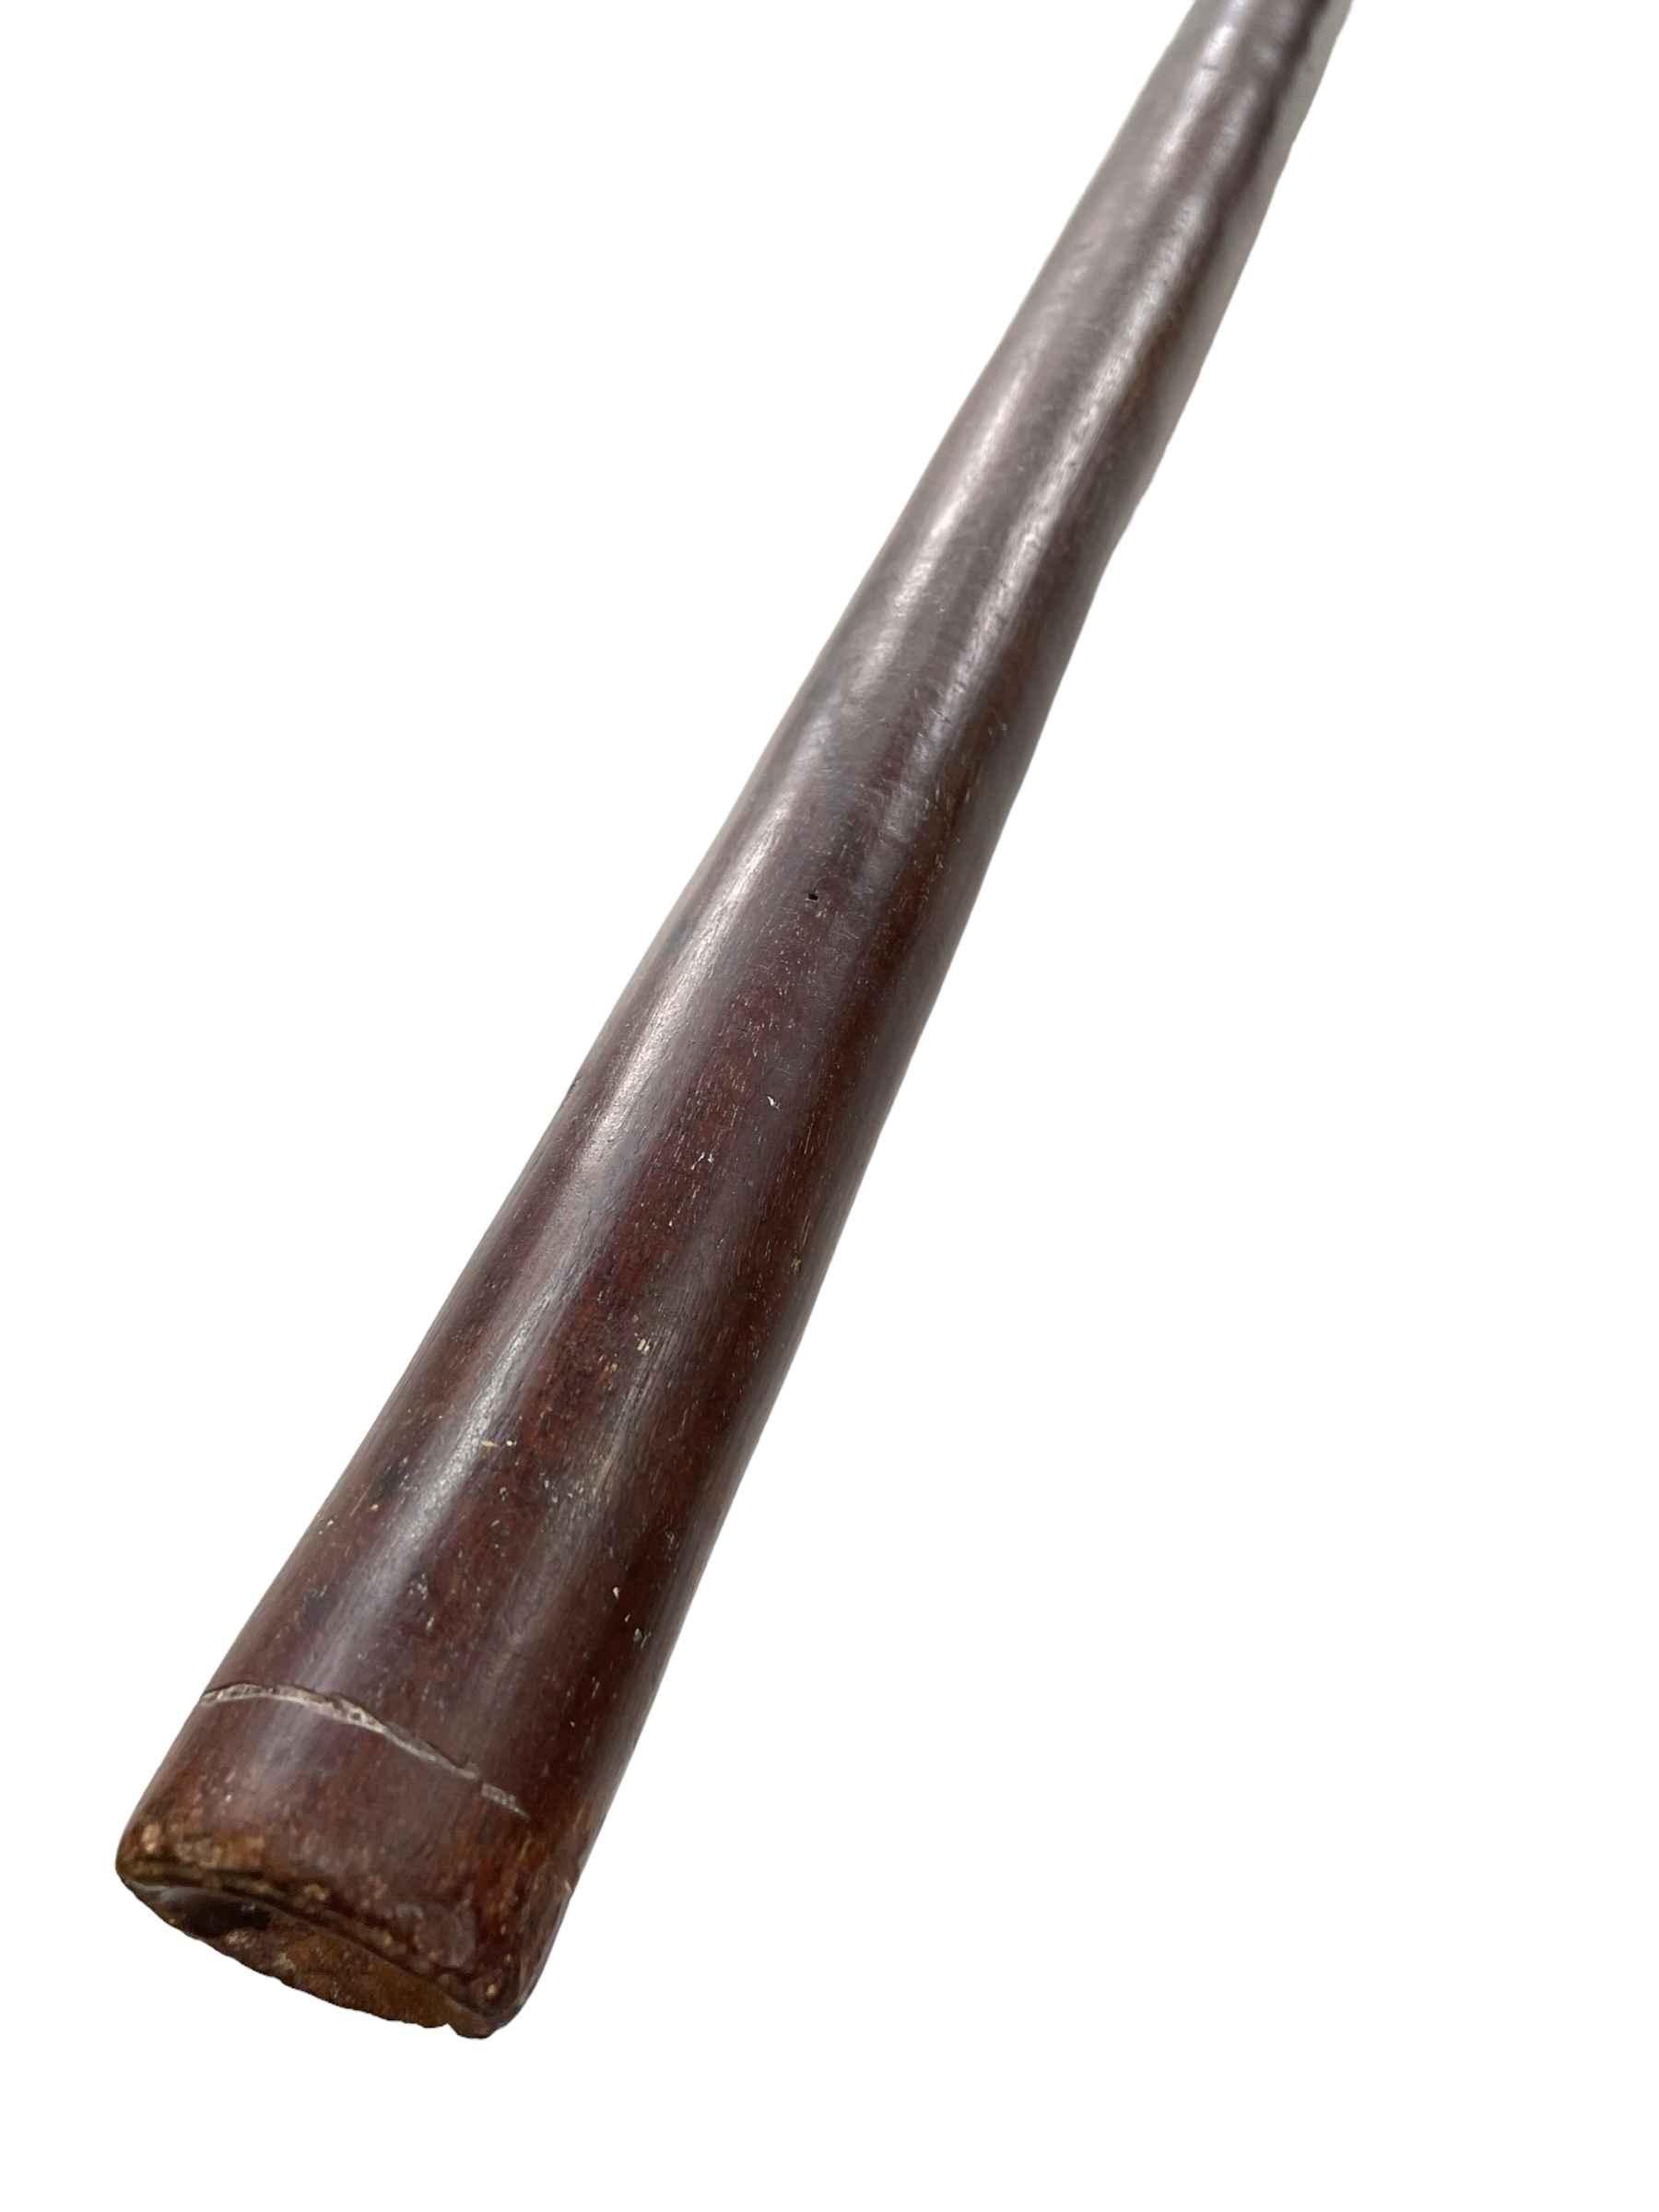 19th Century Fijian Bowai pole war club, of slight tapering form, 111.5cm length. - Image 2 of 2